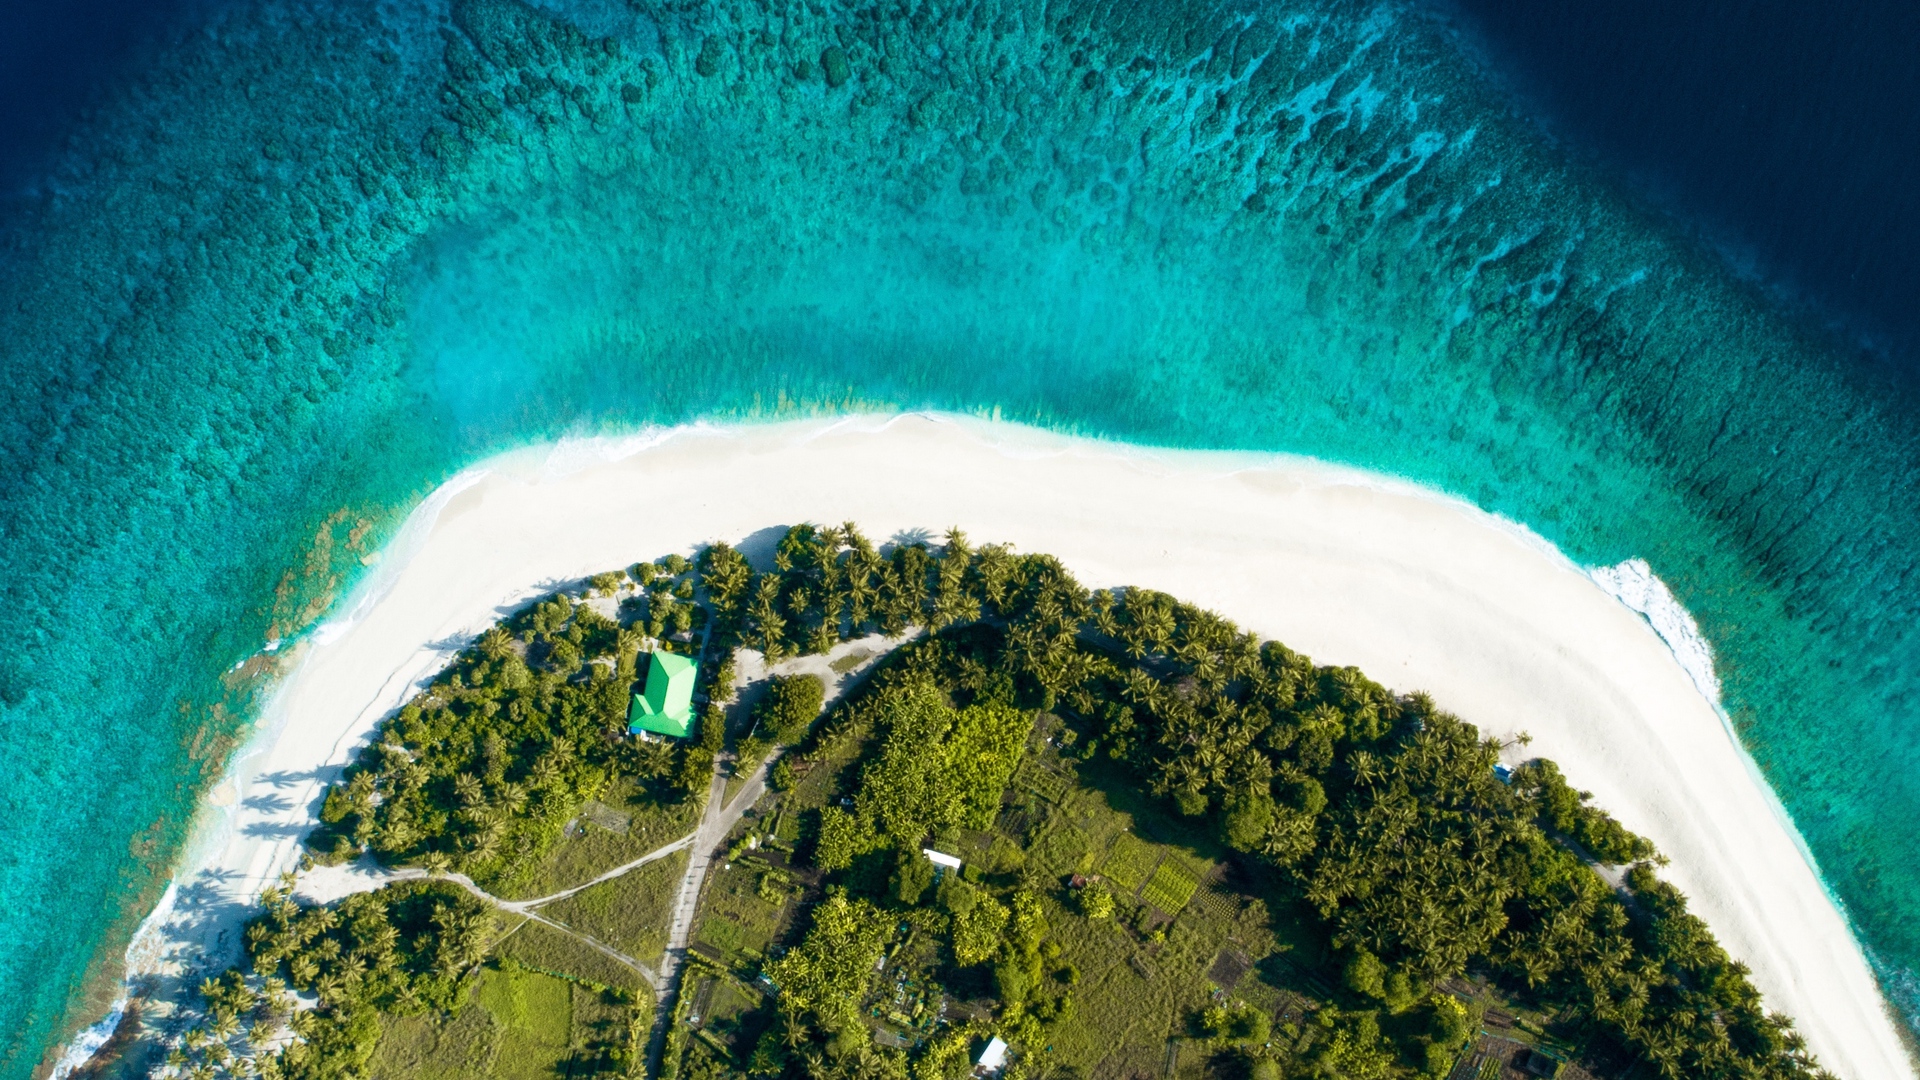 Download wallpaper 1920x1080 maldives, island, aerial view, ocean